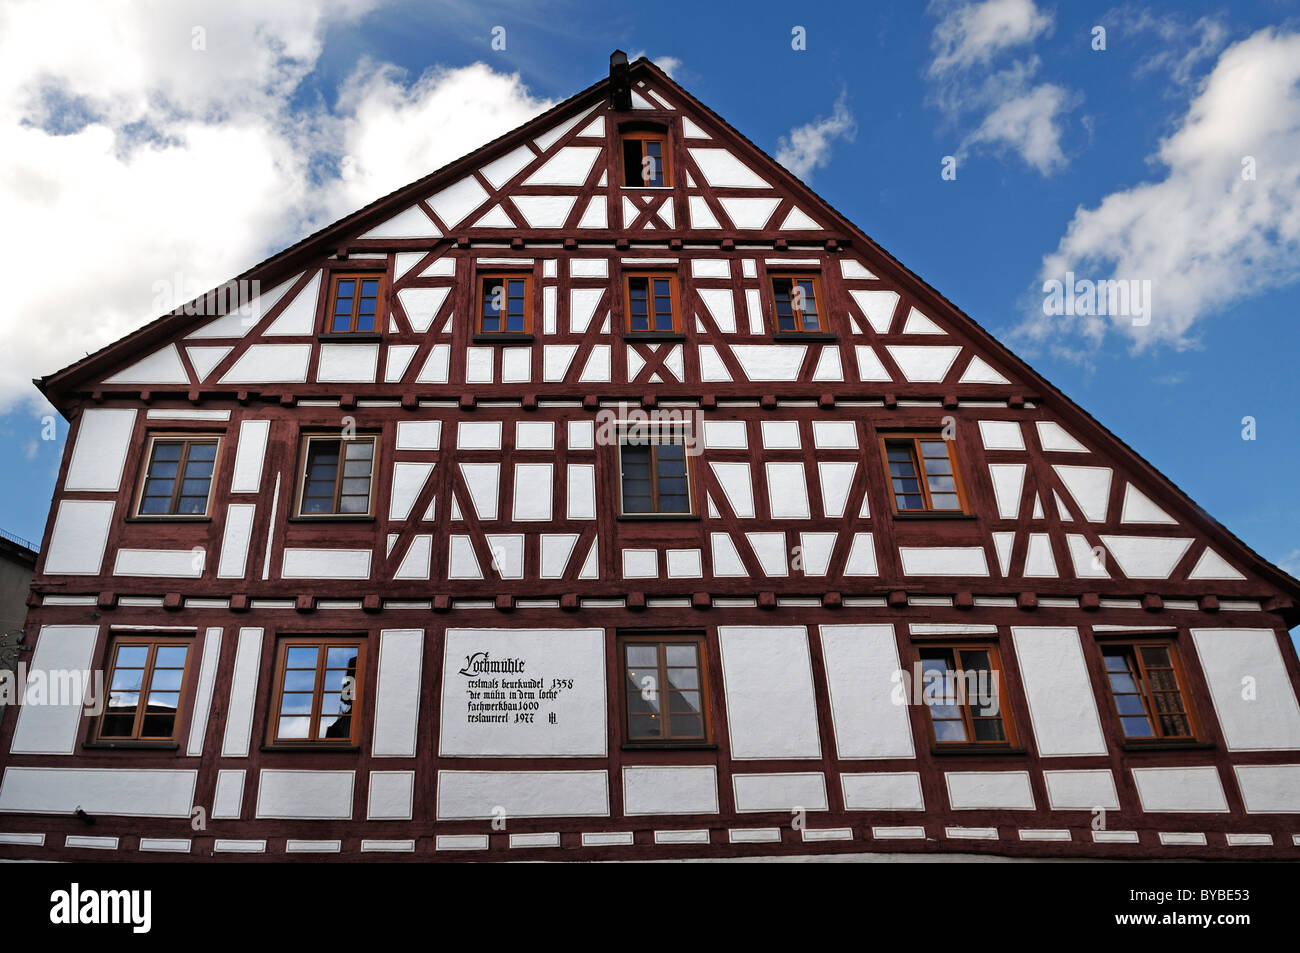 Lochmuehle guesthouse, maison à colombage datant de 1600, Gerbergasse 6, Ulm, Bade-Wurtemberg, Allemagne, Europe Banque D'Images